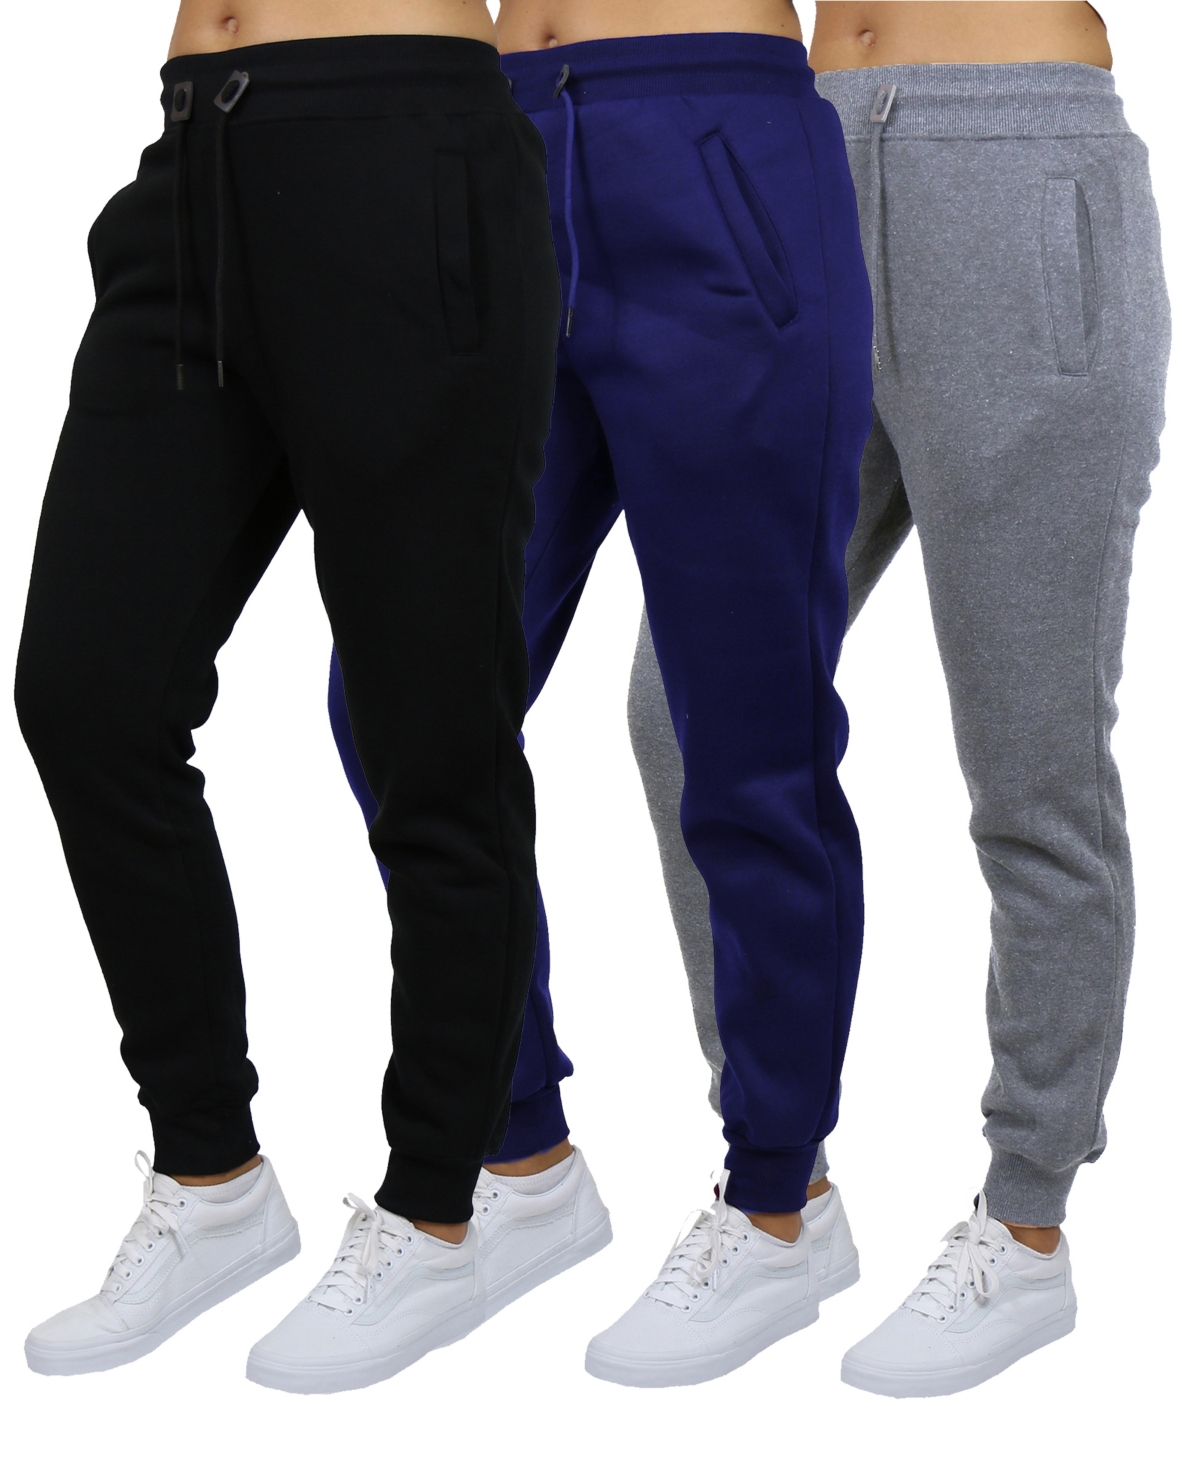 Women's Loose-Fit Fleece Jogger Sweatpants-3 Pack - NV-OL-RD